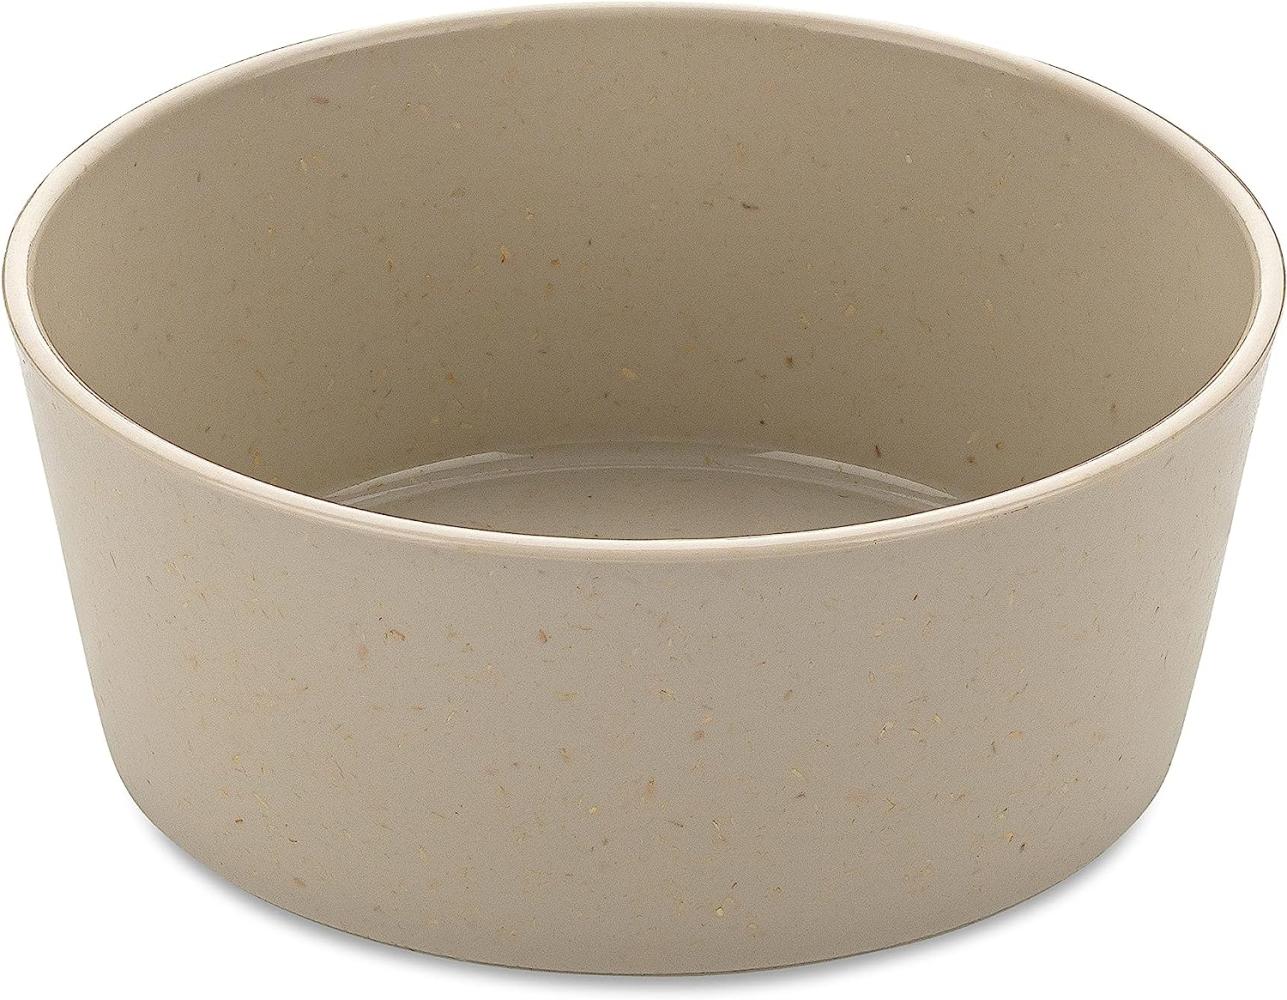 Koziol Schale Connect Bowl, 2er Set, Schüssel, Kunststoff-Holz-Mix, Nature Desert Sand, 890 ml, 7171700 Bild 1